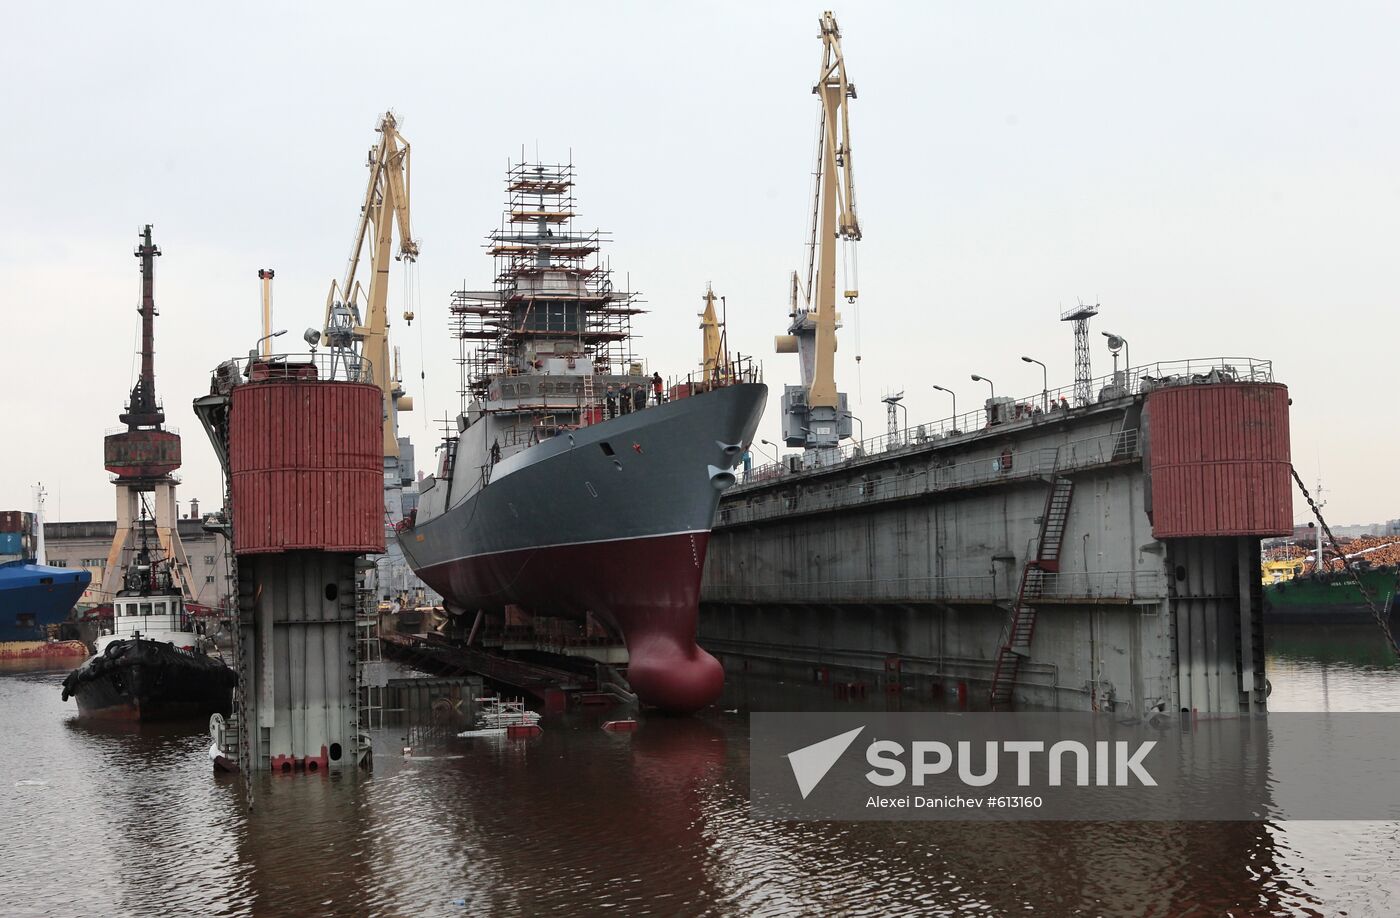 Soobrazitelny corvette launched in St Petersburg